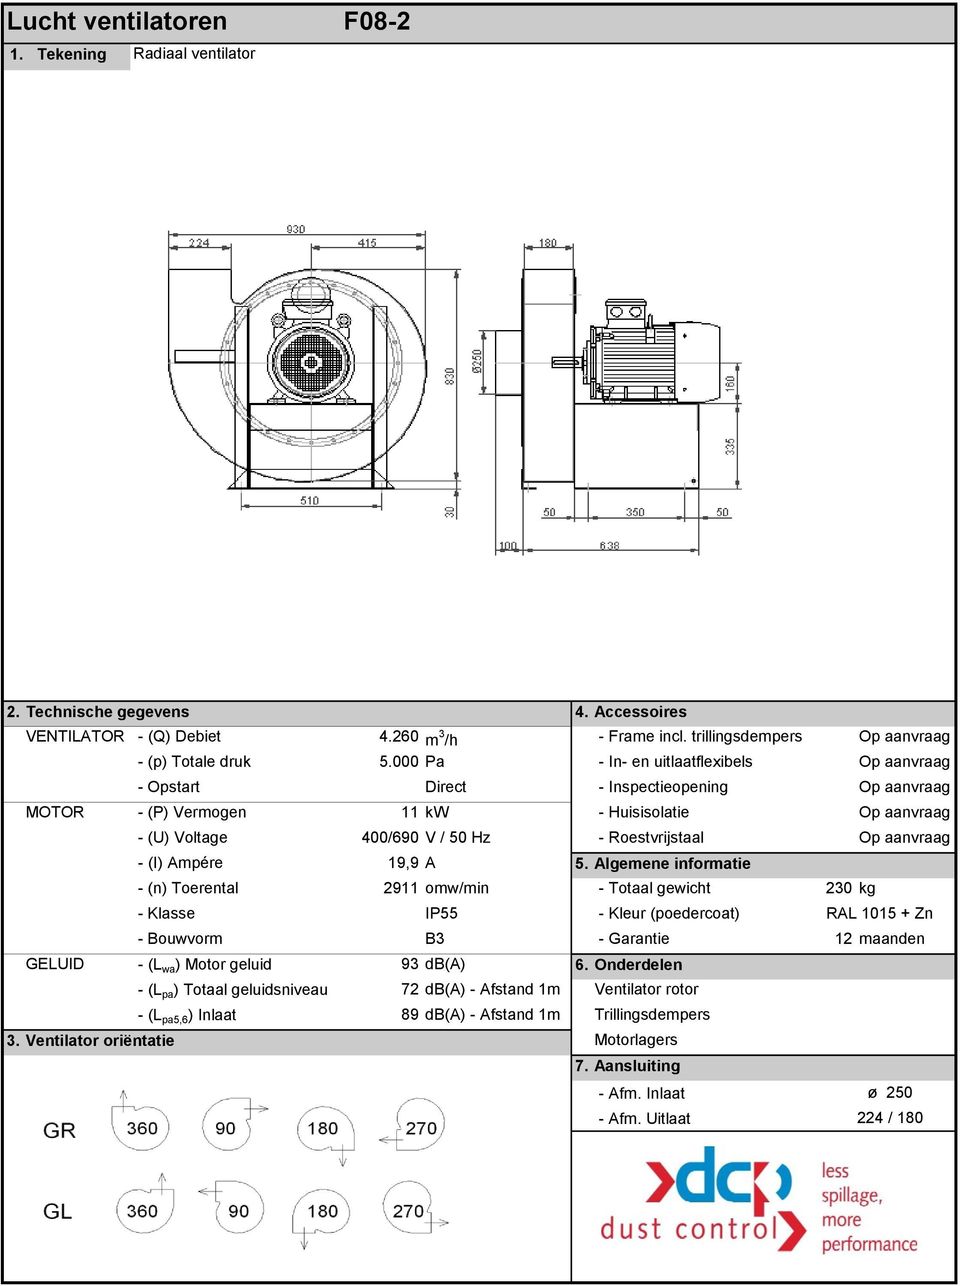 Algemene informatie - (n) Toerental 2911 omw/min - Totaal gewicht 230 kg GELUID - (L wa ) Motor geluid 93 db(a) 6.